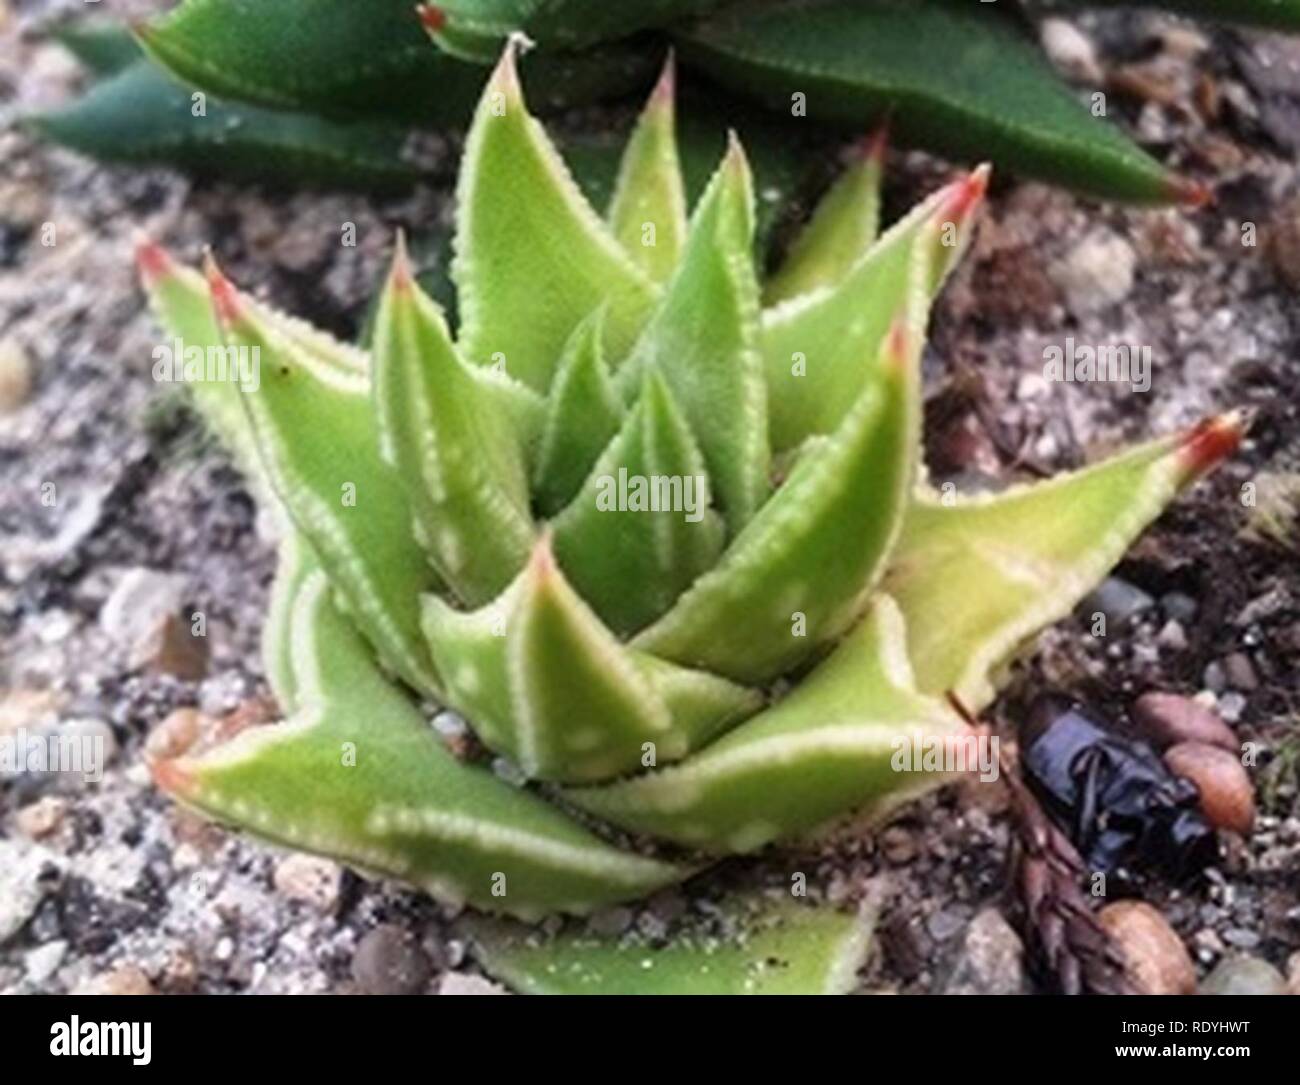 Astrolista bicarinata hybrid in cultivation 2. Stock Photo